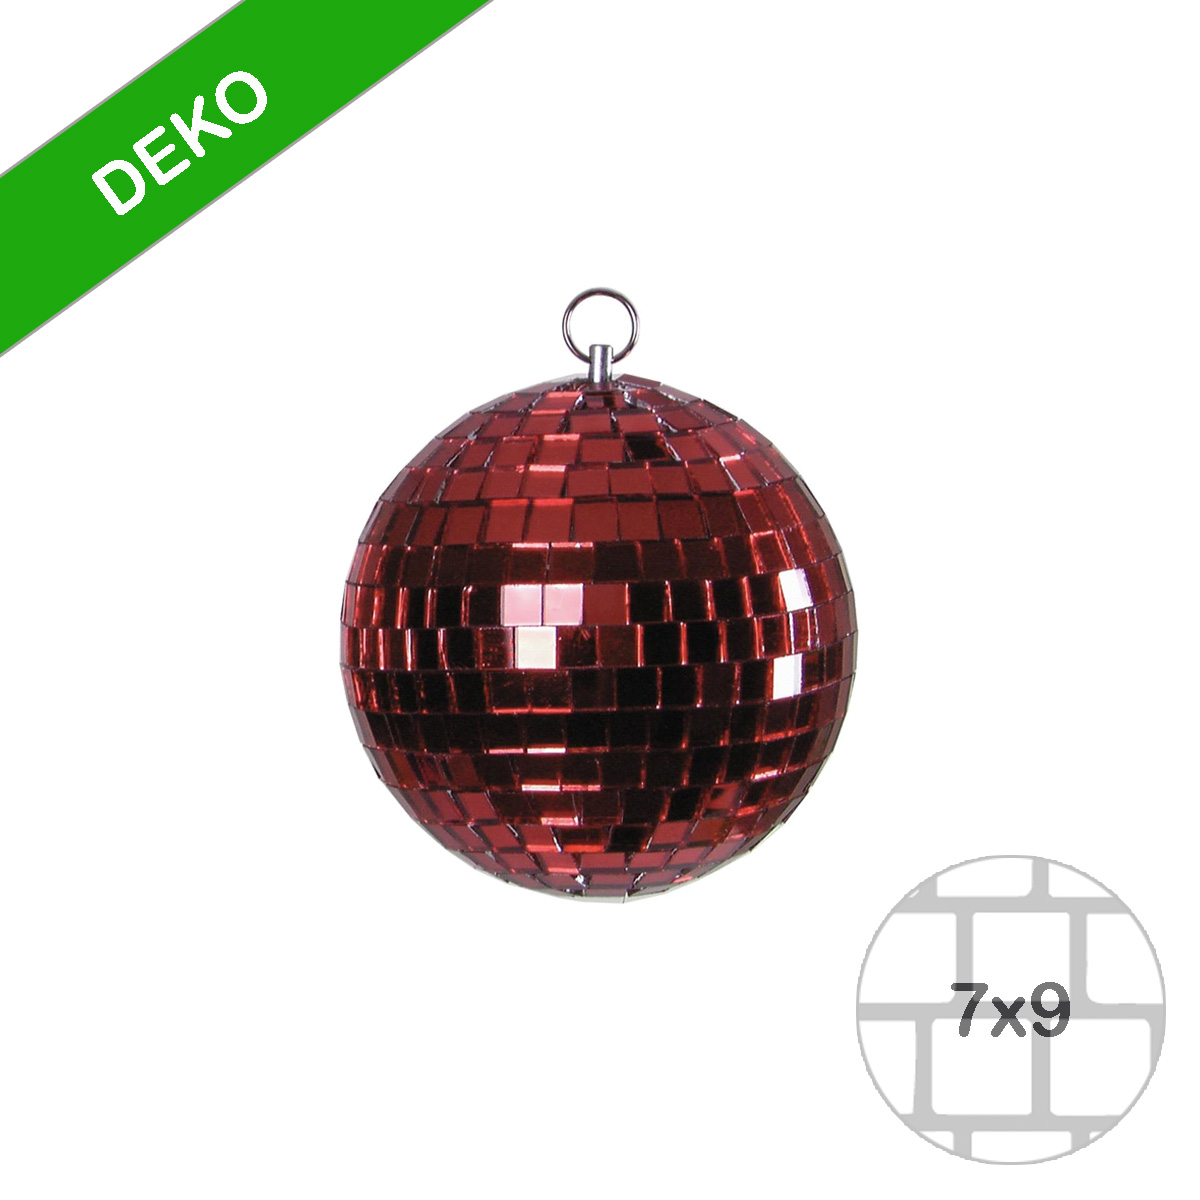 Spiegelkugel rot - Diskokugel (Discokugel) zur Dekoration - Echtglas - mirrorball red